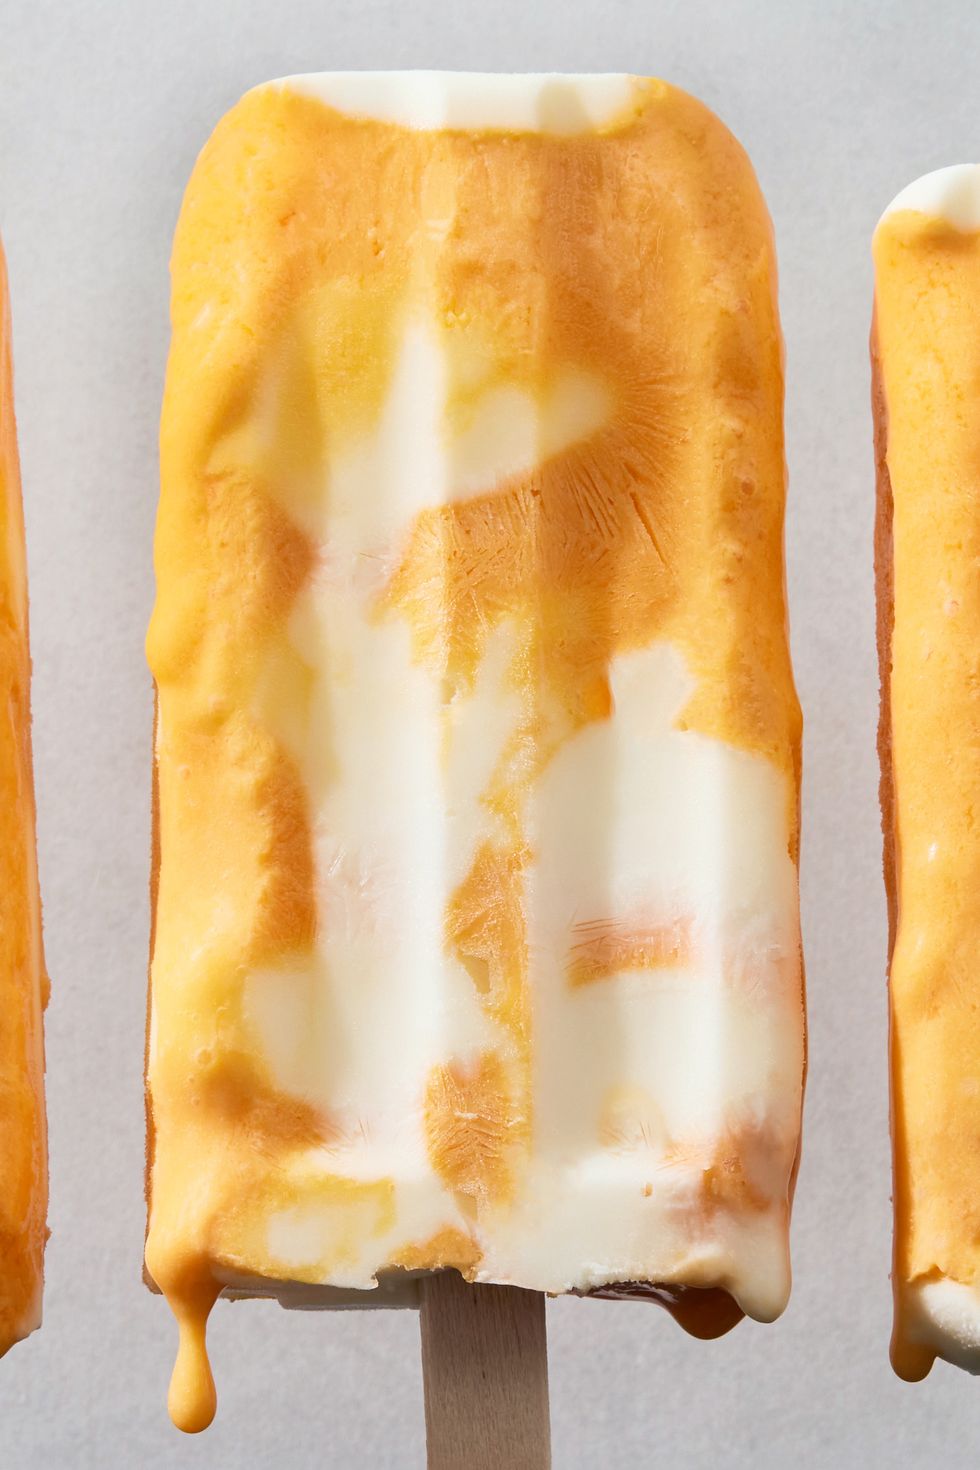 frozen creamsicle bars with orange and cream swirls